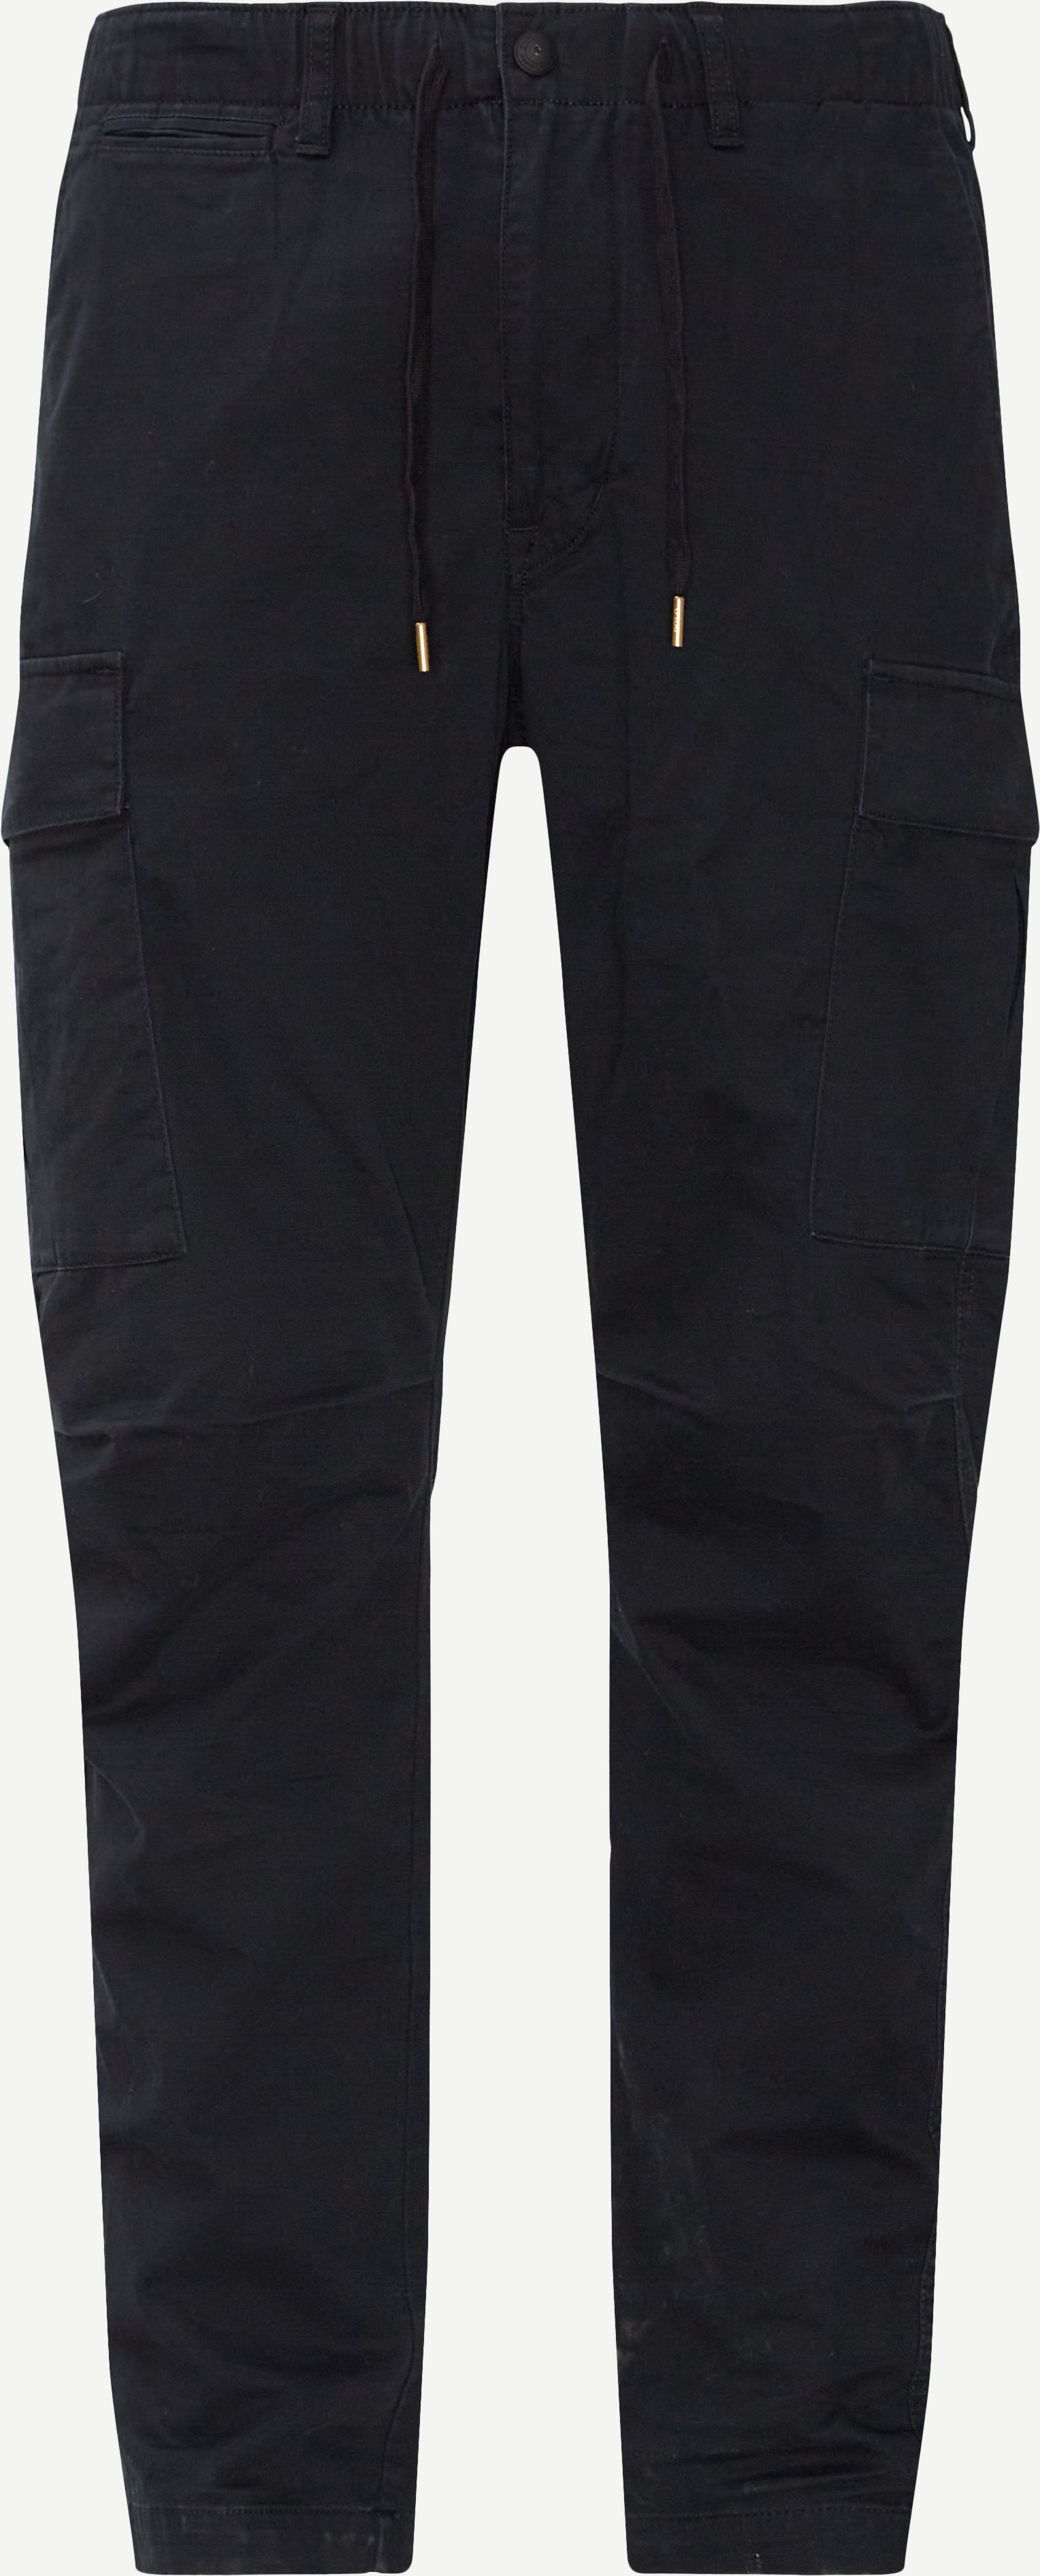 Polo Ralph Lauren Trousers 710835172 Black